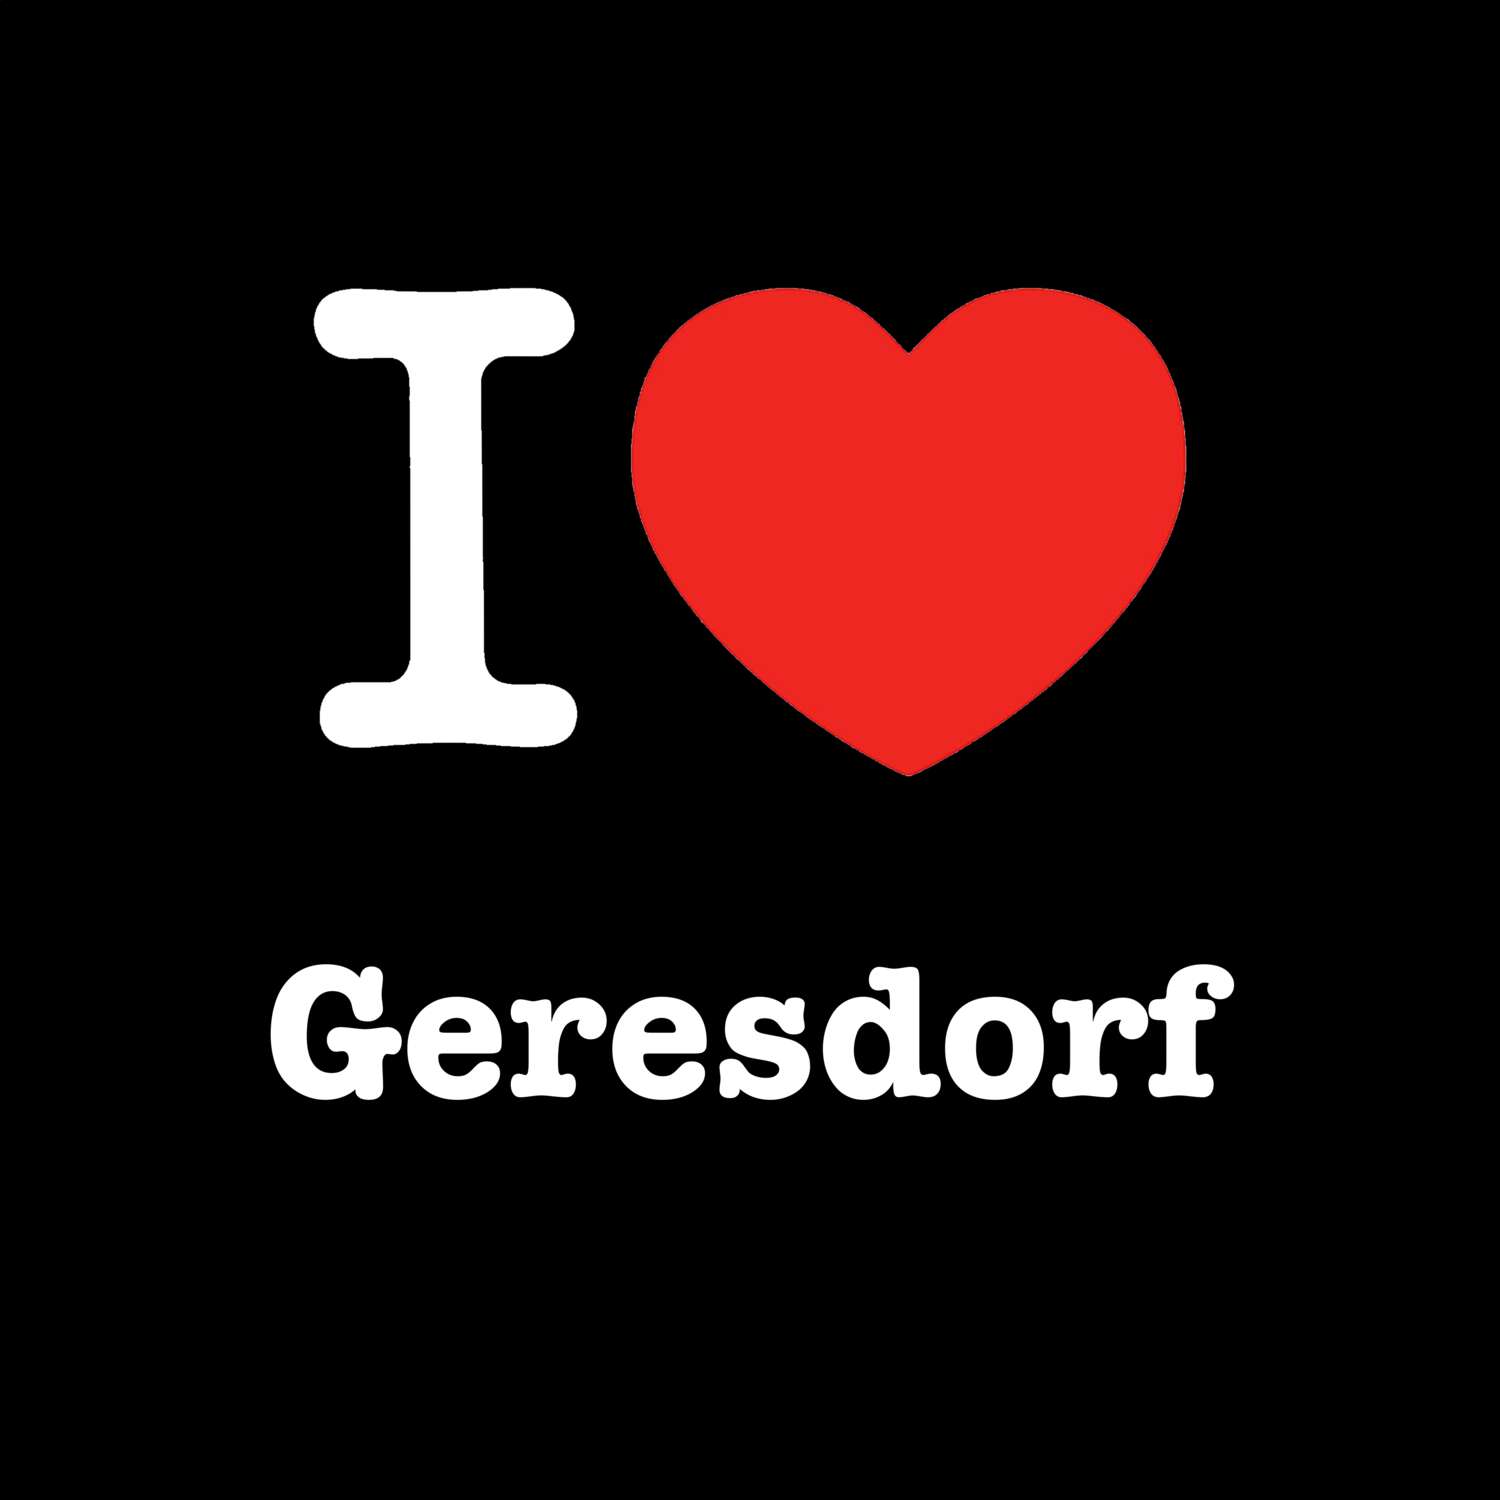 Geresdorf T-Shirt »I love«